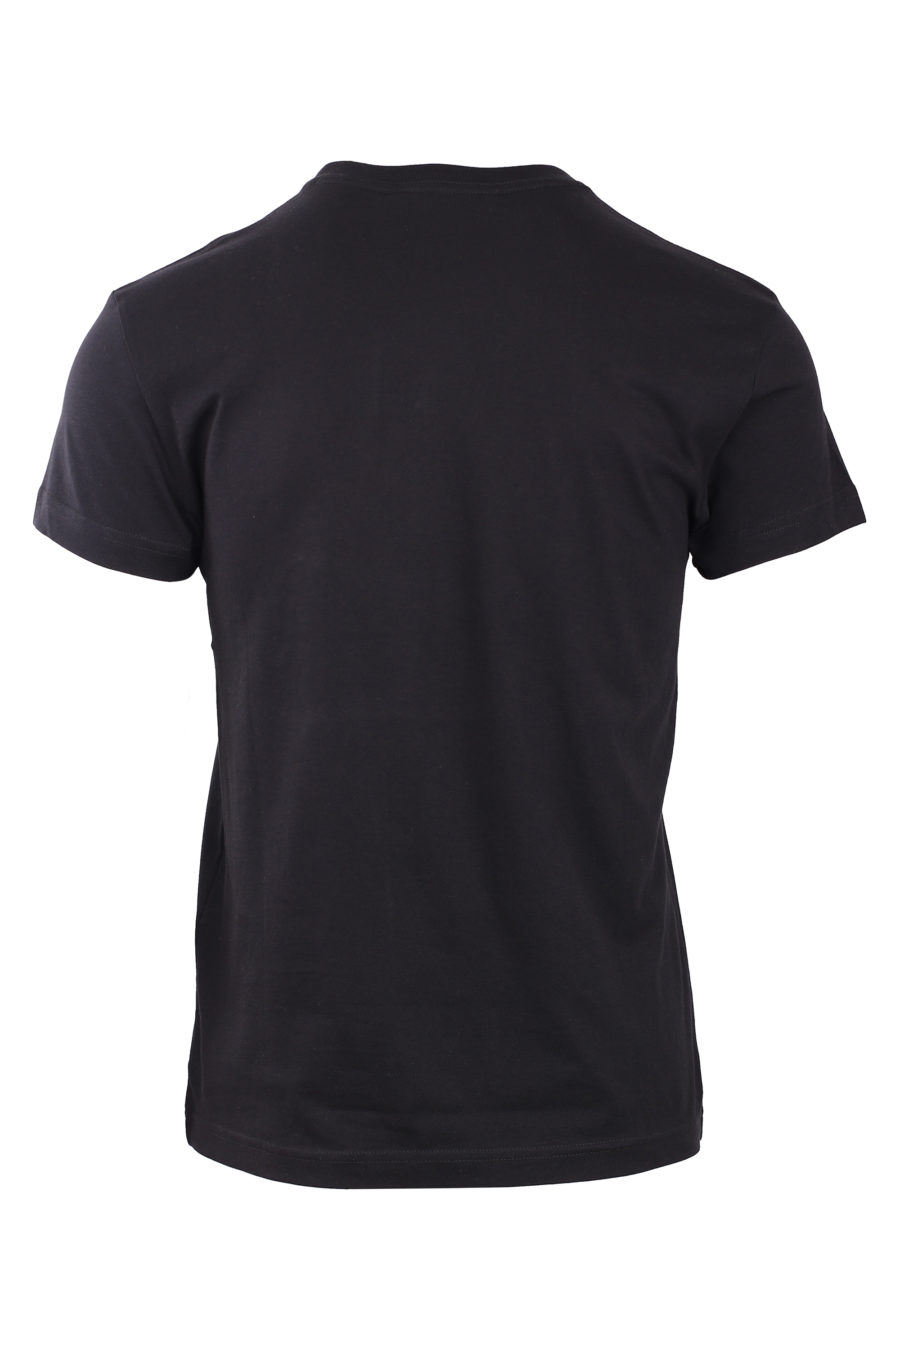 Camiseta negra con logo redondo tornasol - IMG 0776